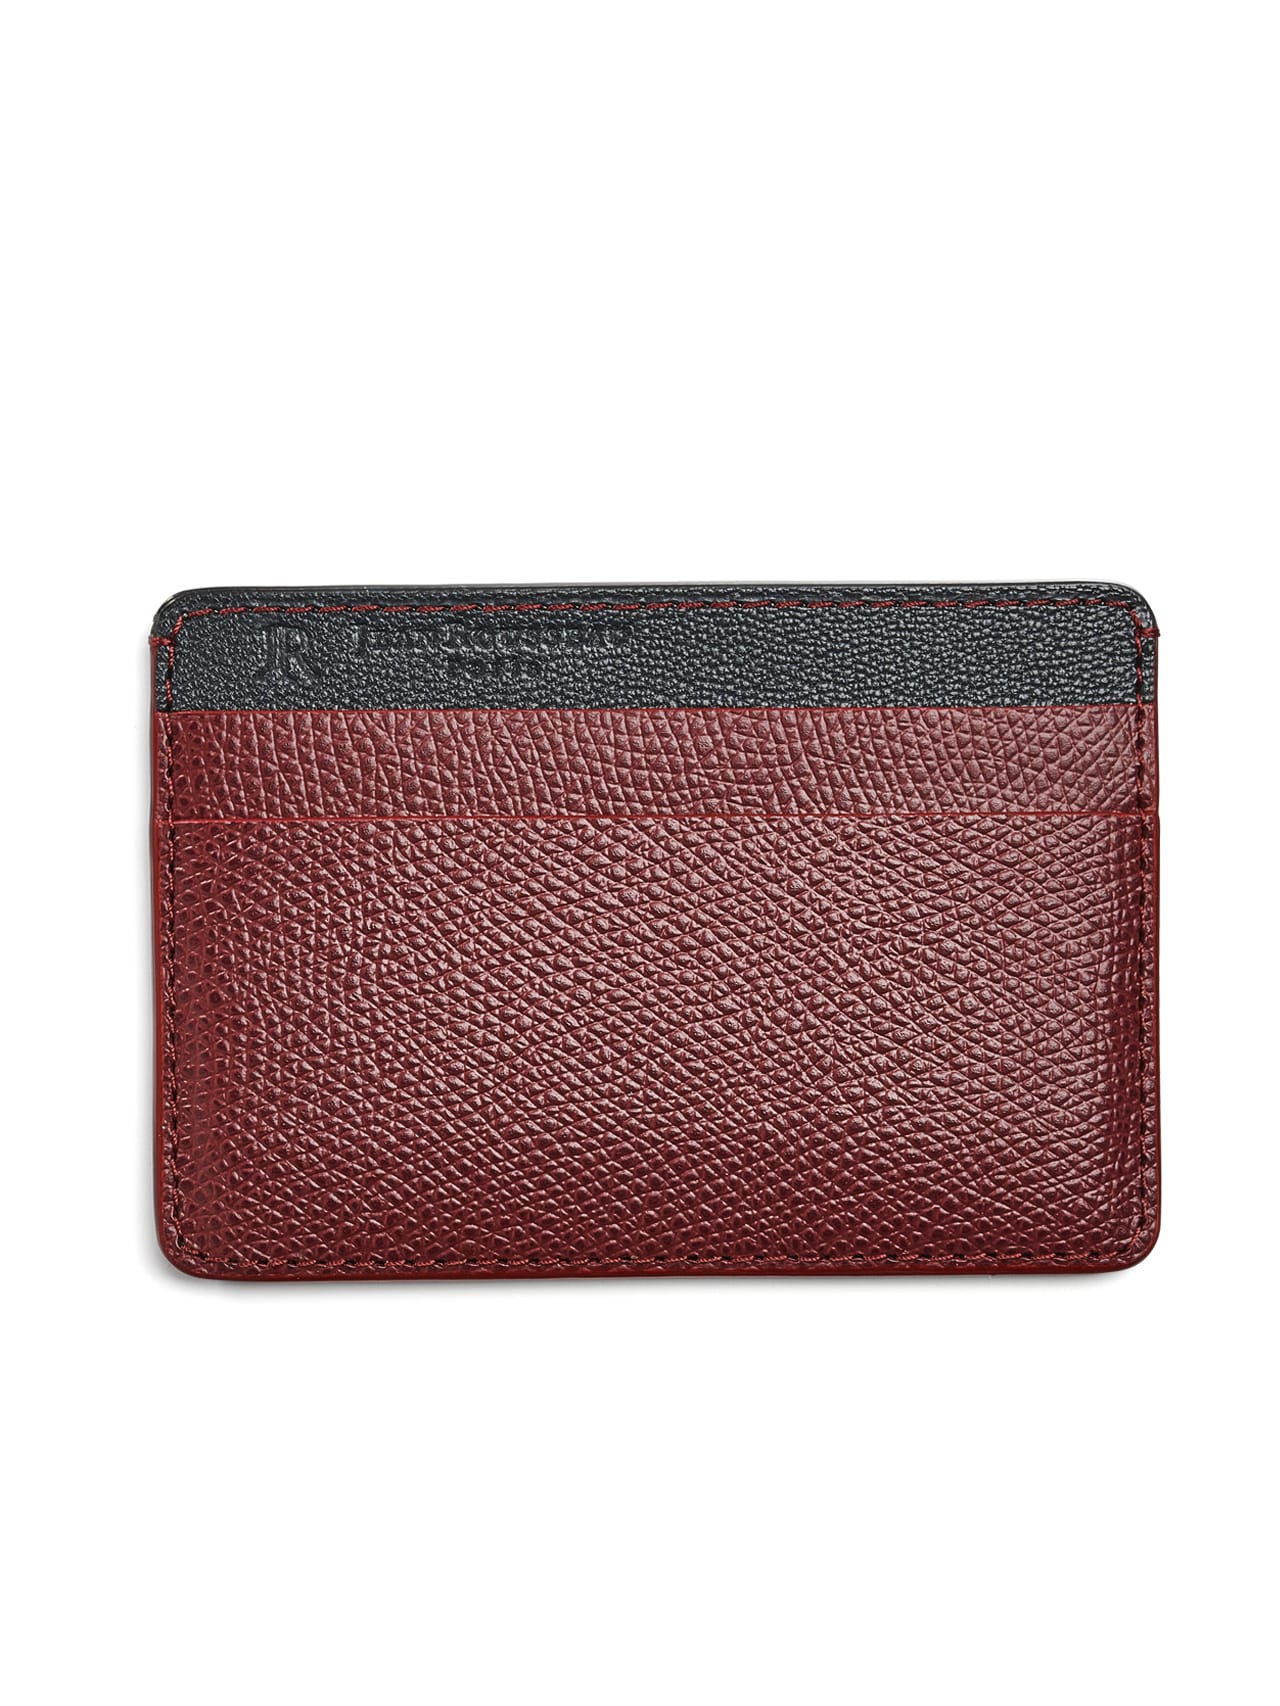 slim card holder leather black red leather